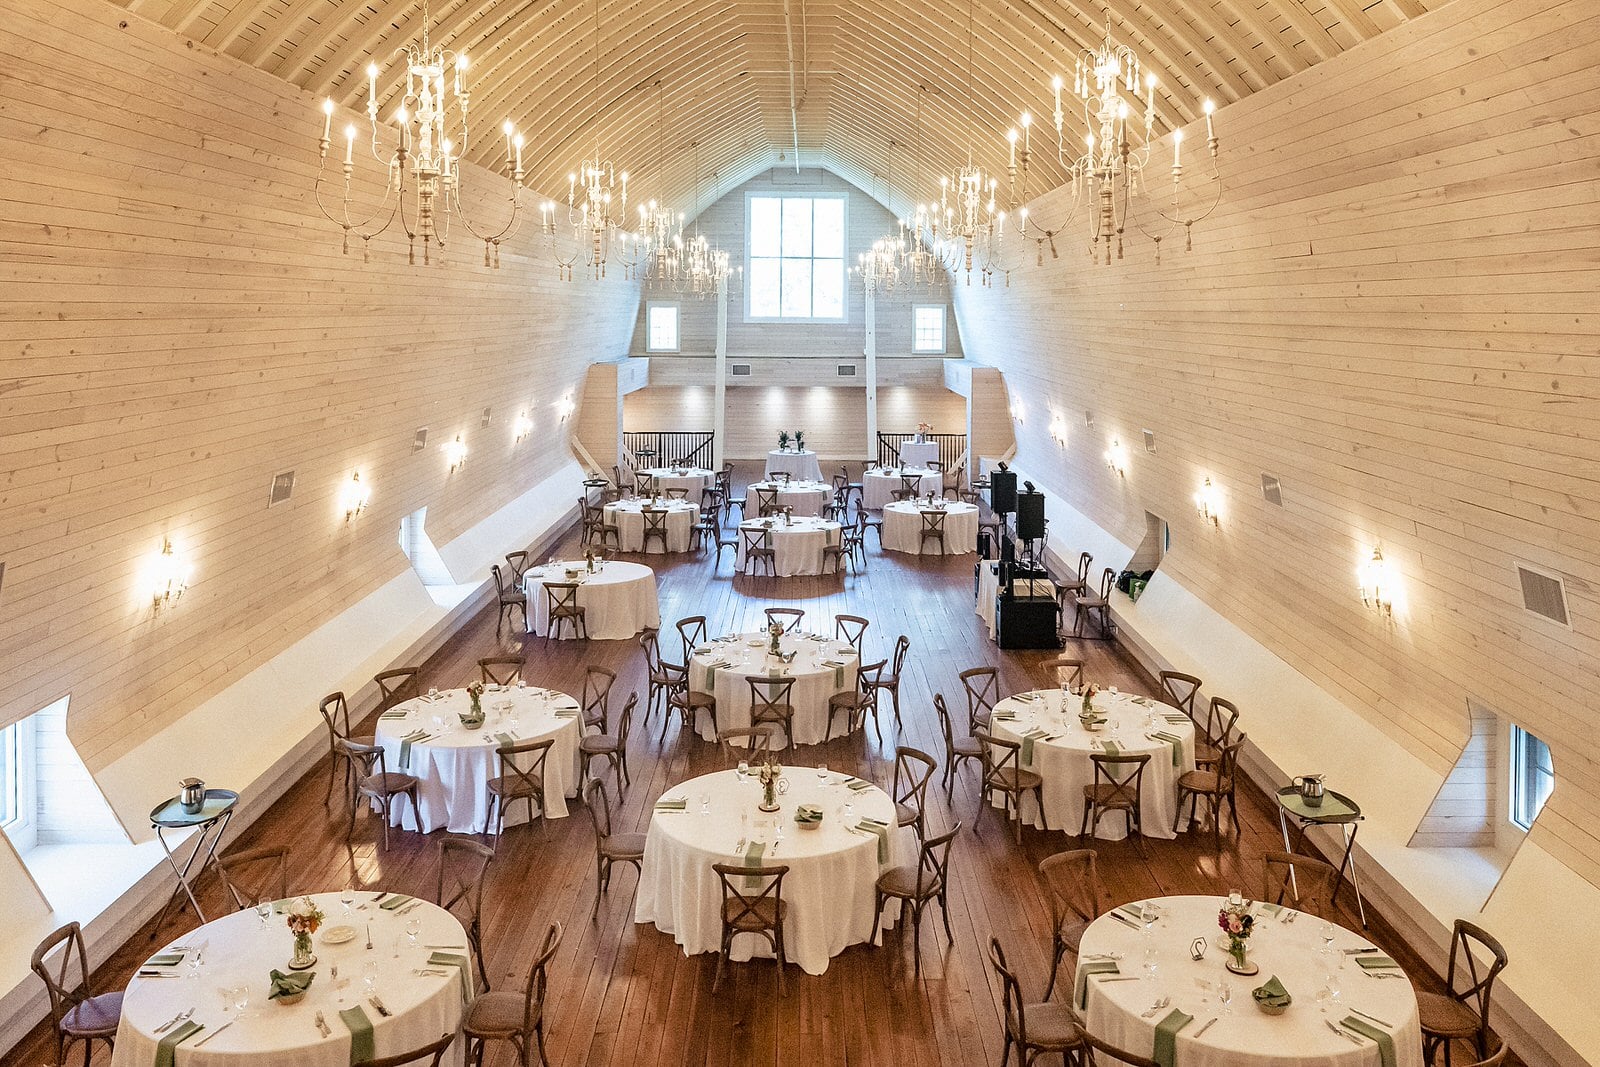 Wakefield Barn Wedding Reception - Green & White wedding reception decor - Wedding inspiration